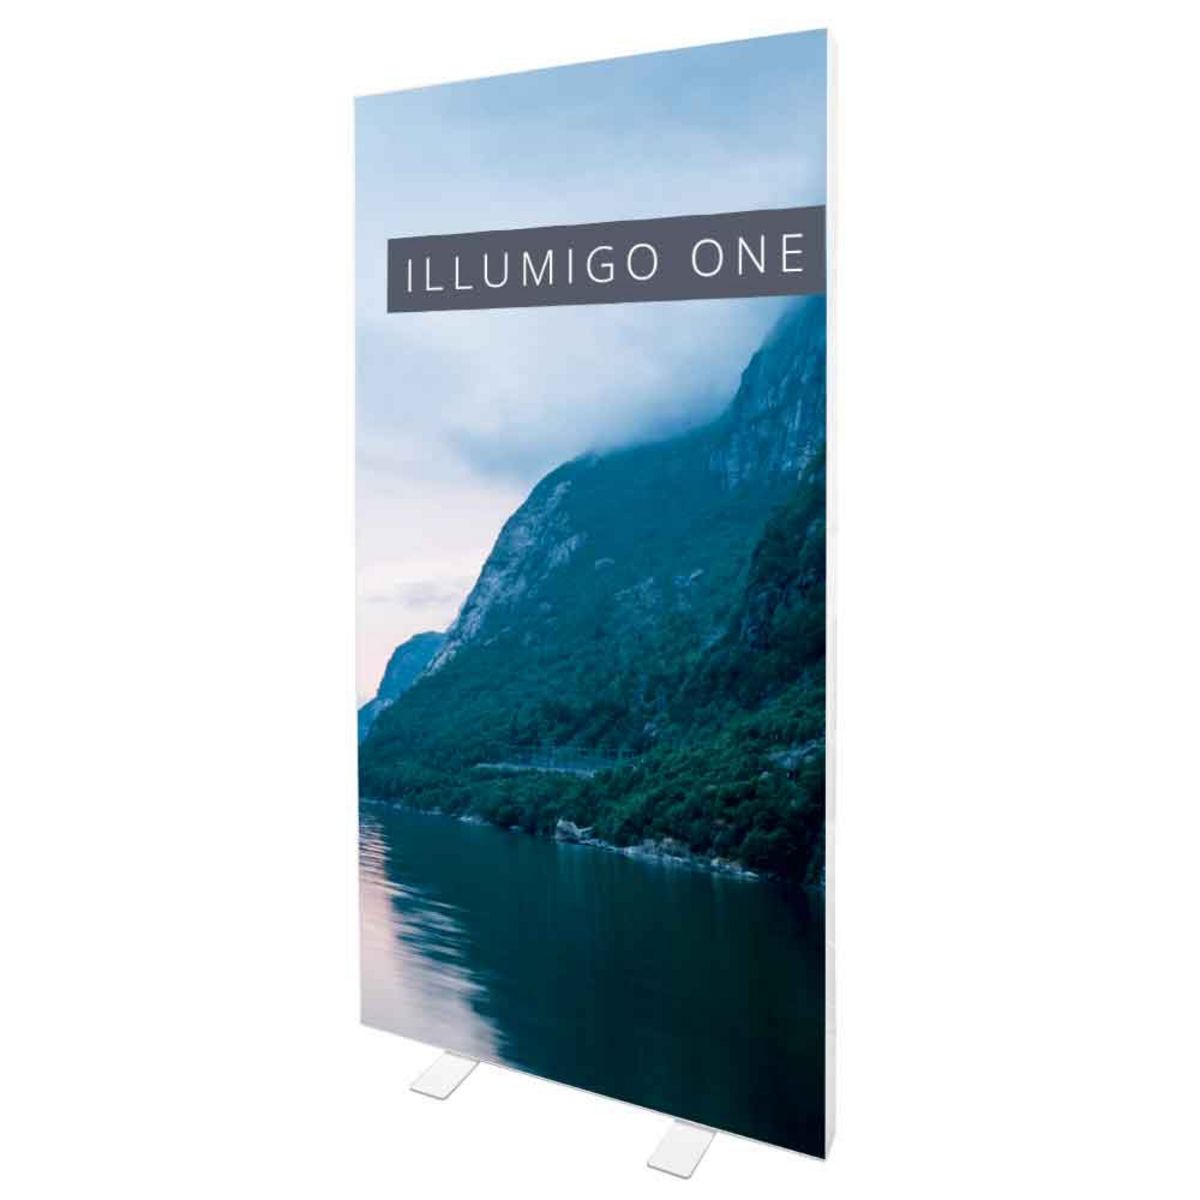 illumigo-one-2-main-81668.jpg